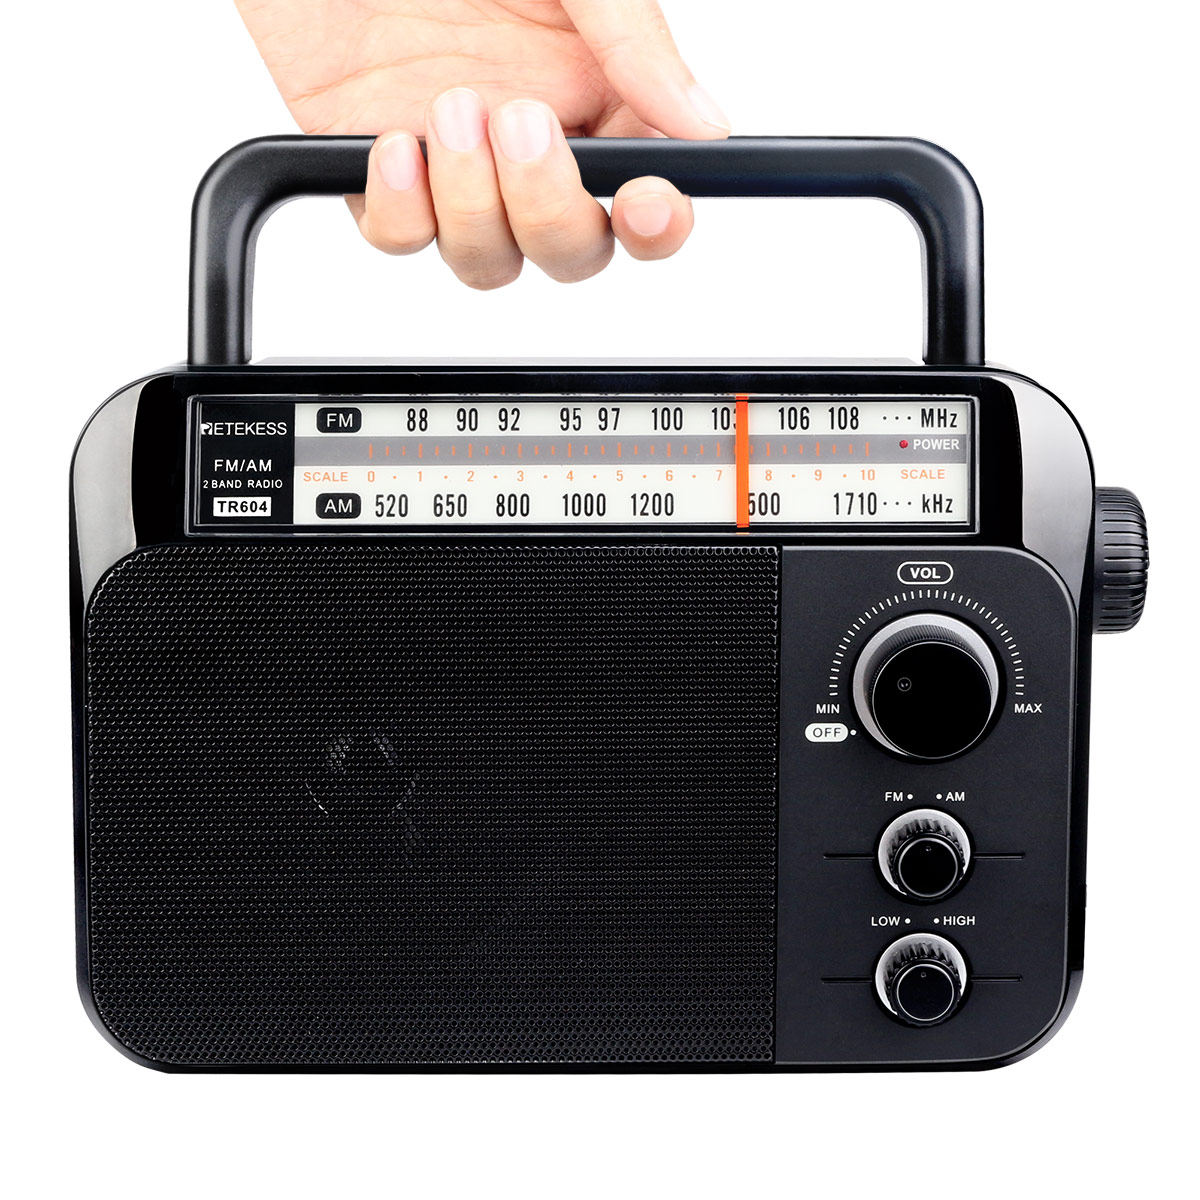 Retekess TR604 AM FM Radio, Battery Operated Radio Portable, AM FM Radio  Plug in Wall, High/Low Tone Mode, Big Speaker, Earphone Jack,for Senior,  Home